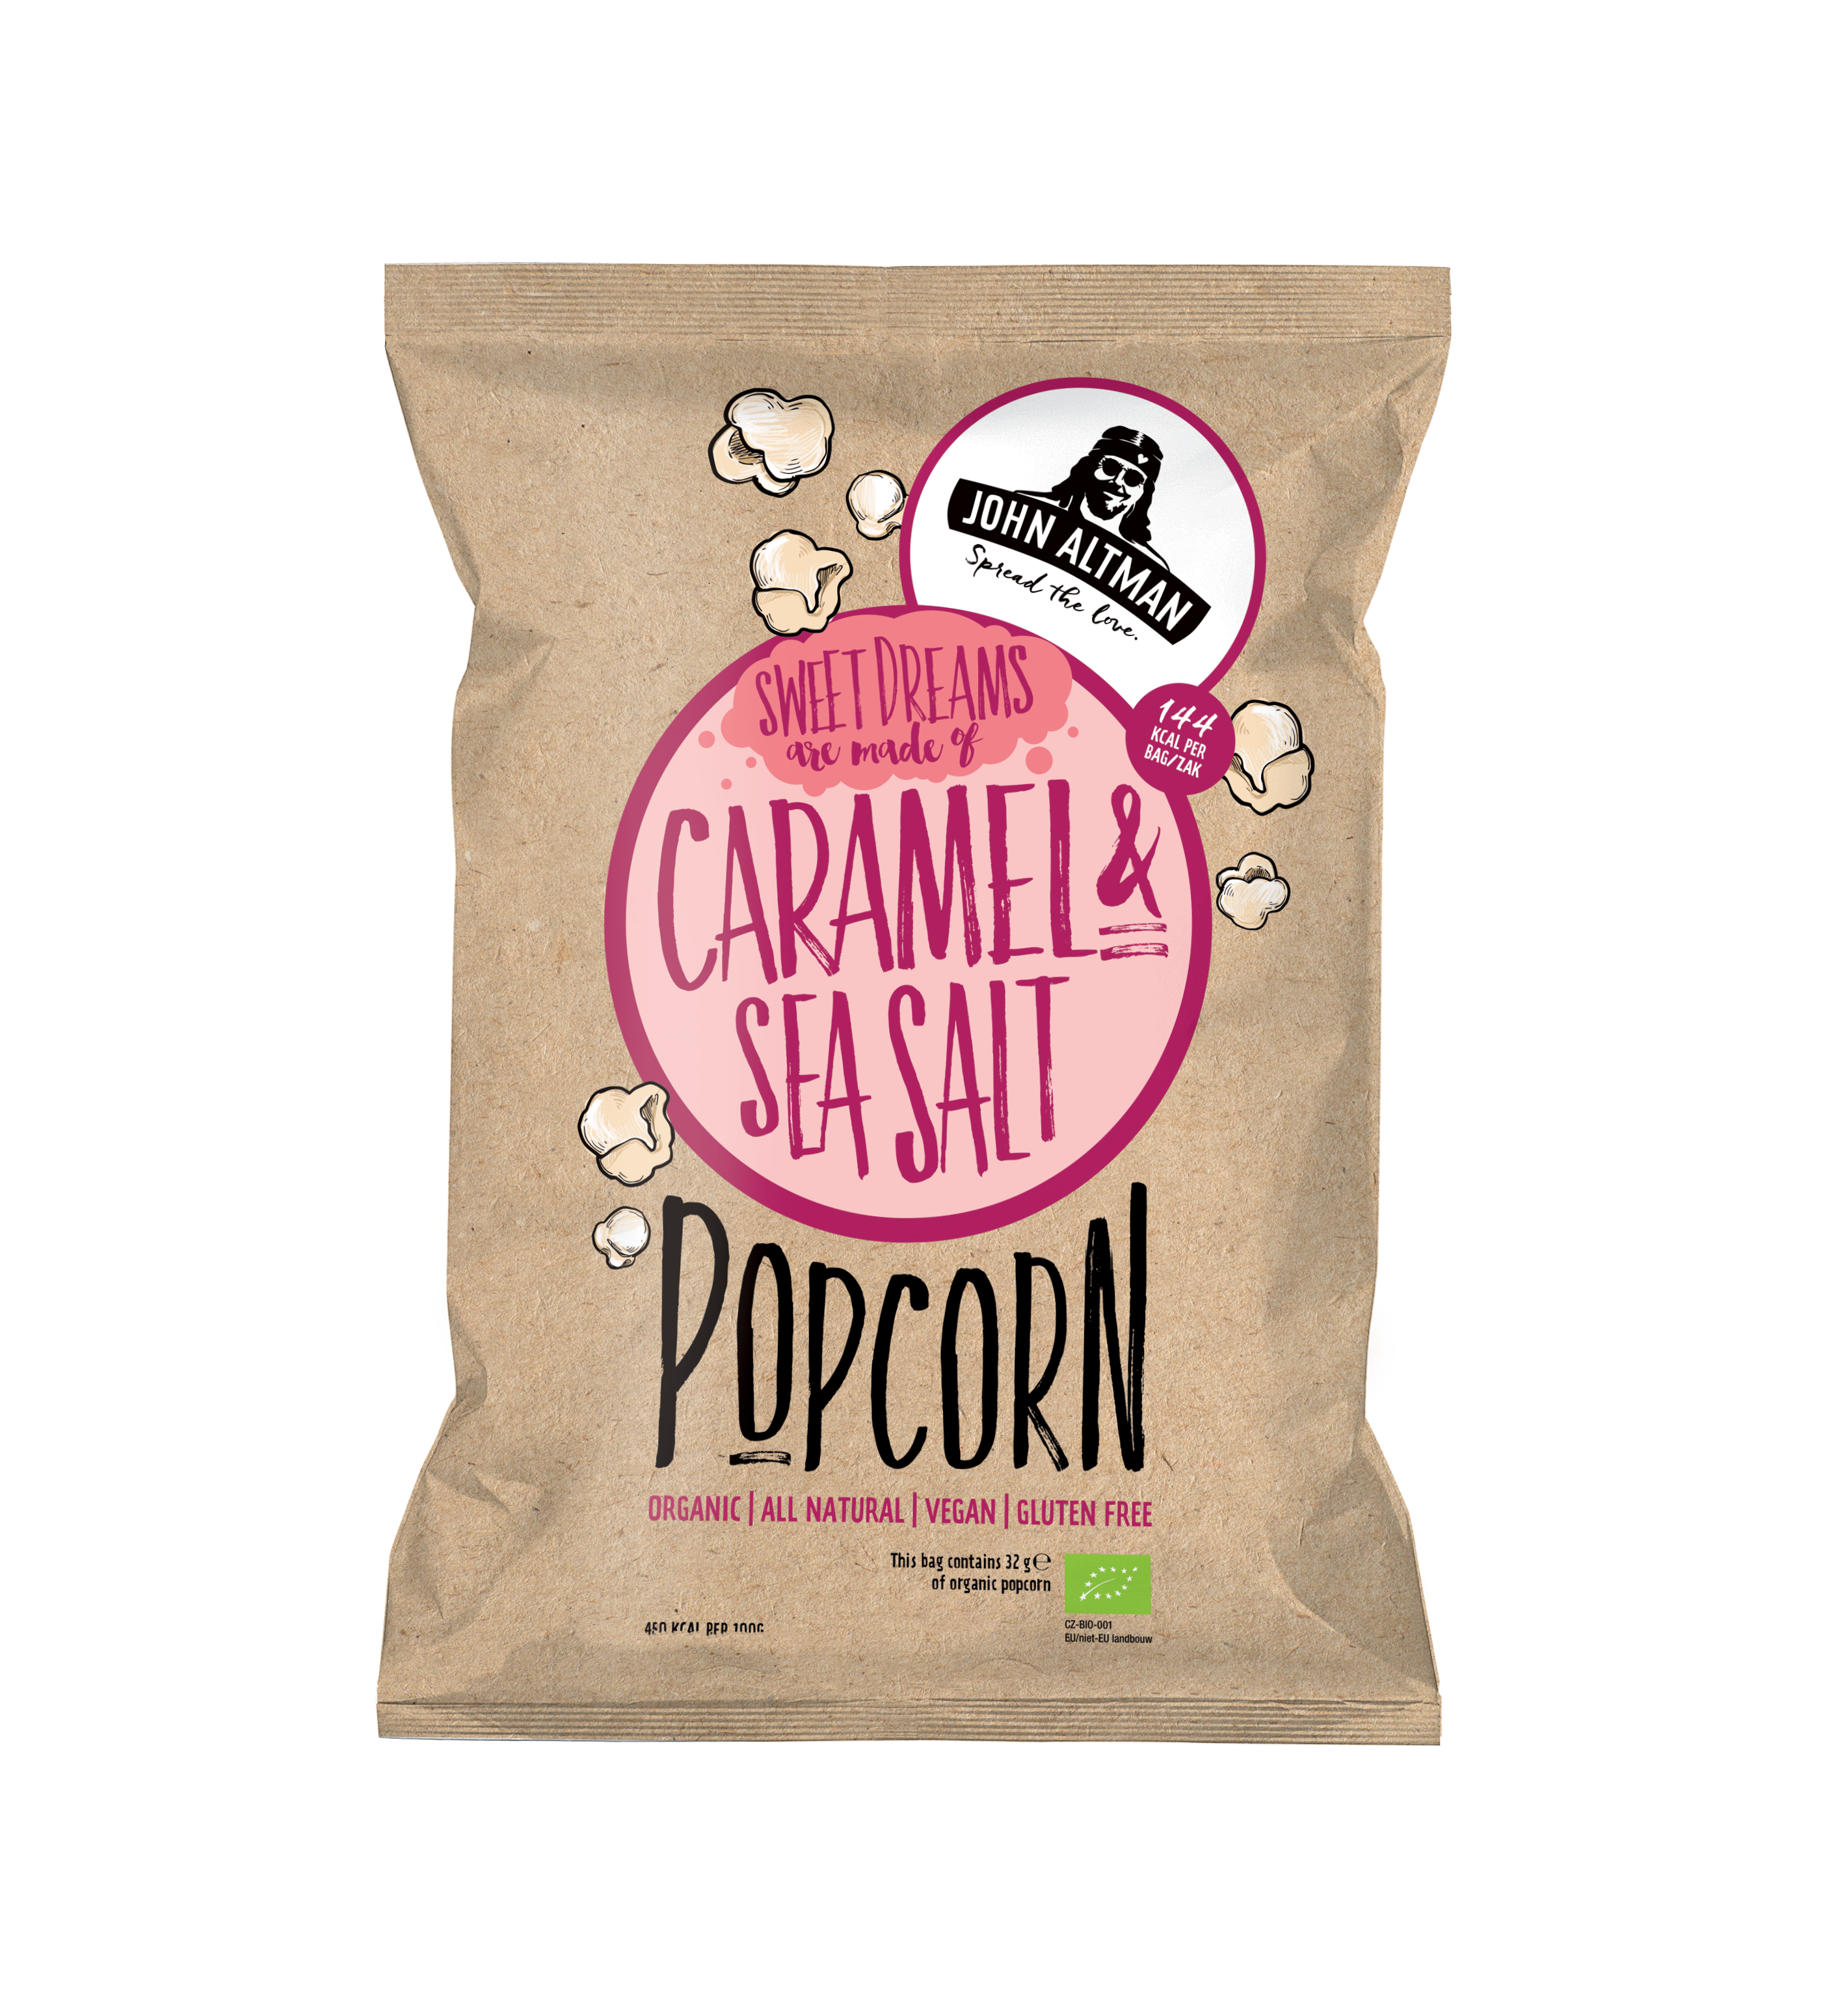 Sweet & Salty popcorn 32gr. John Altman